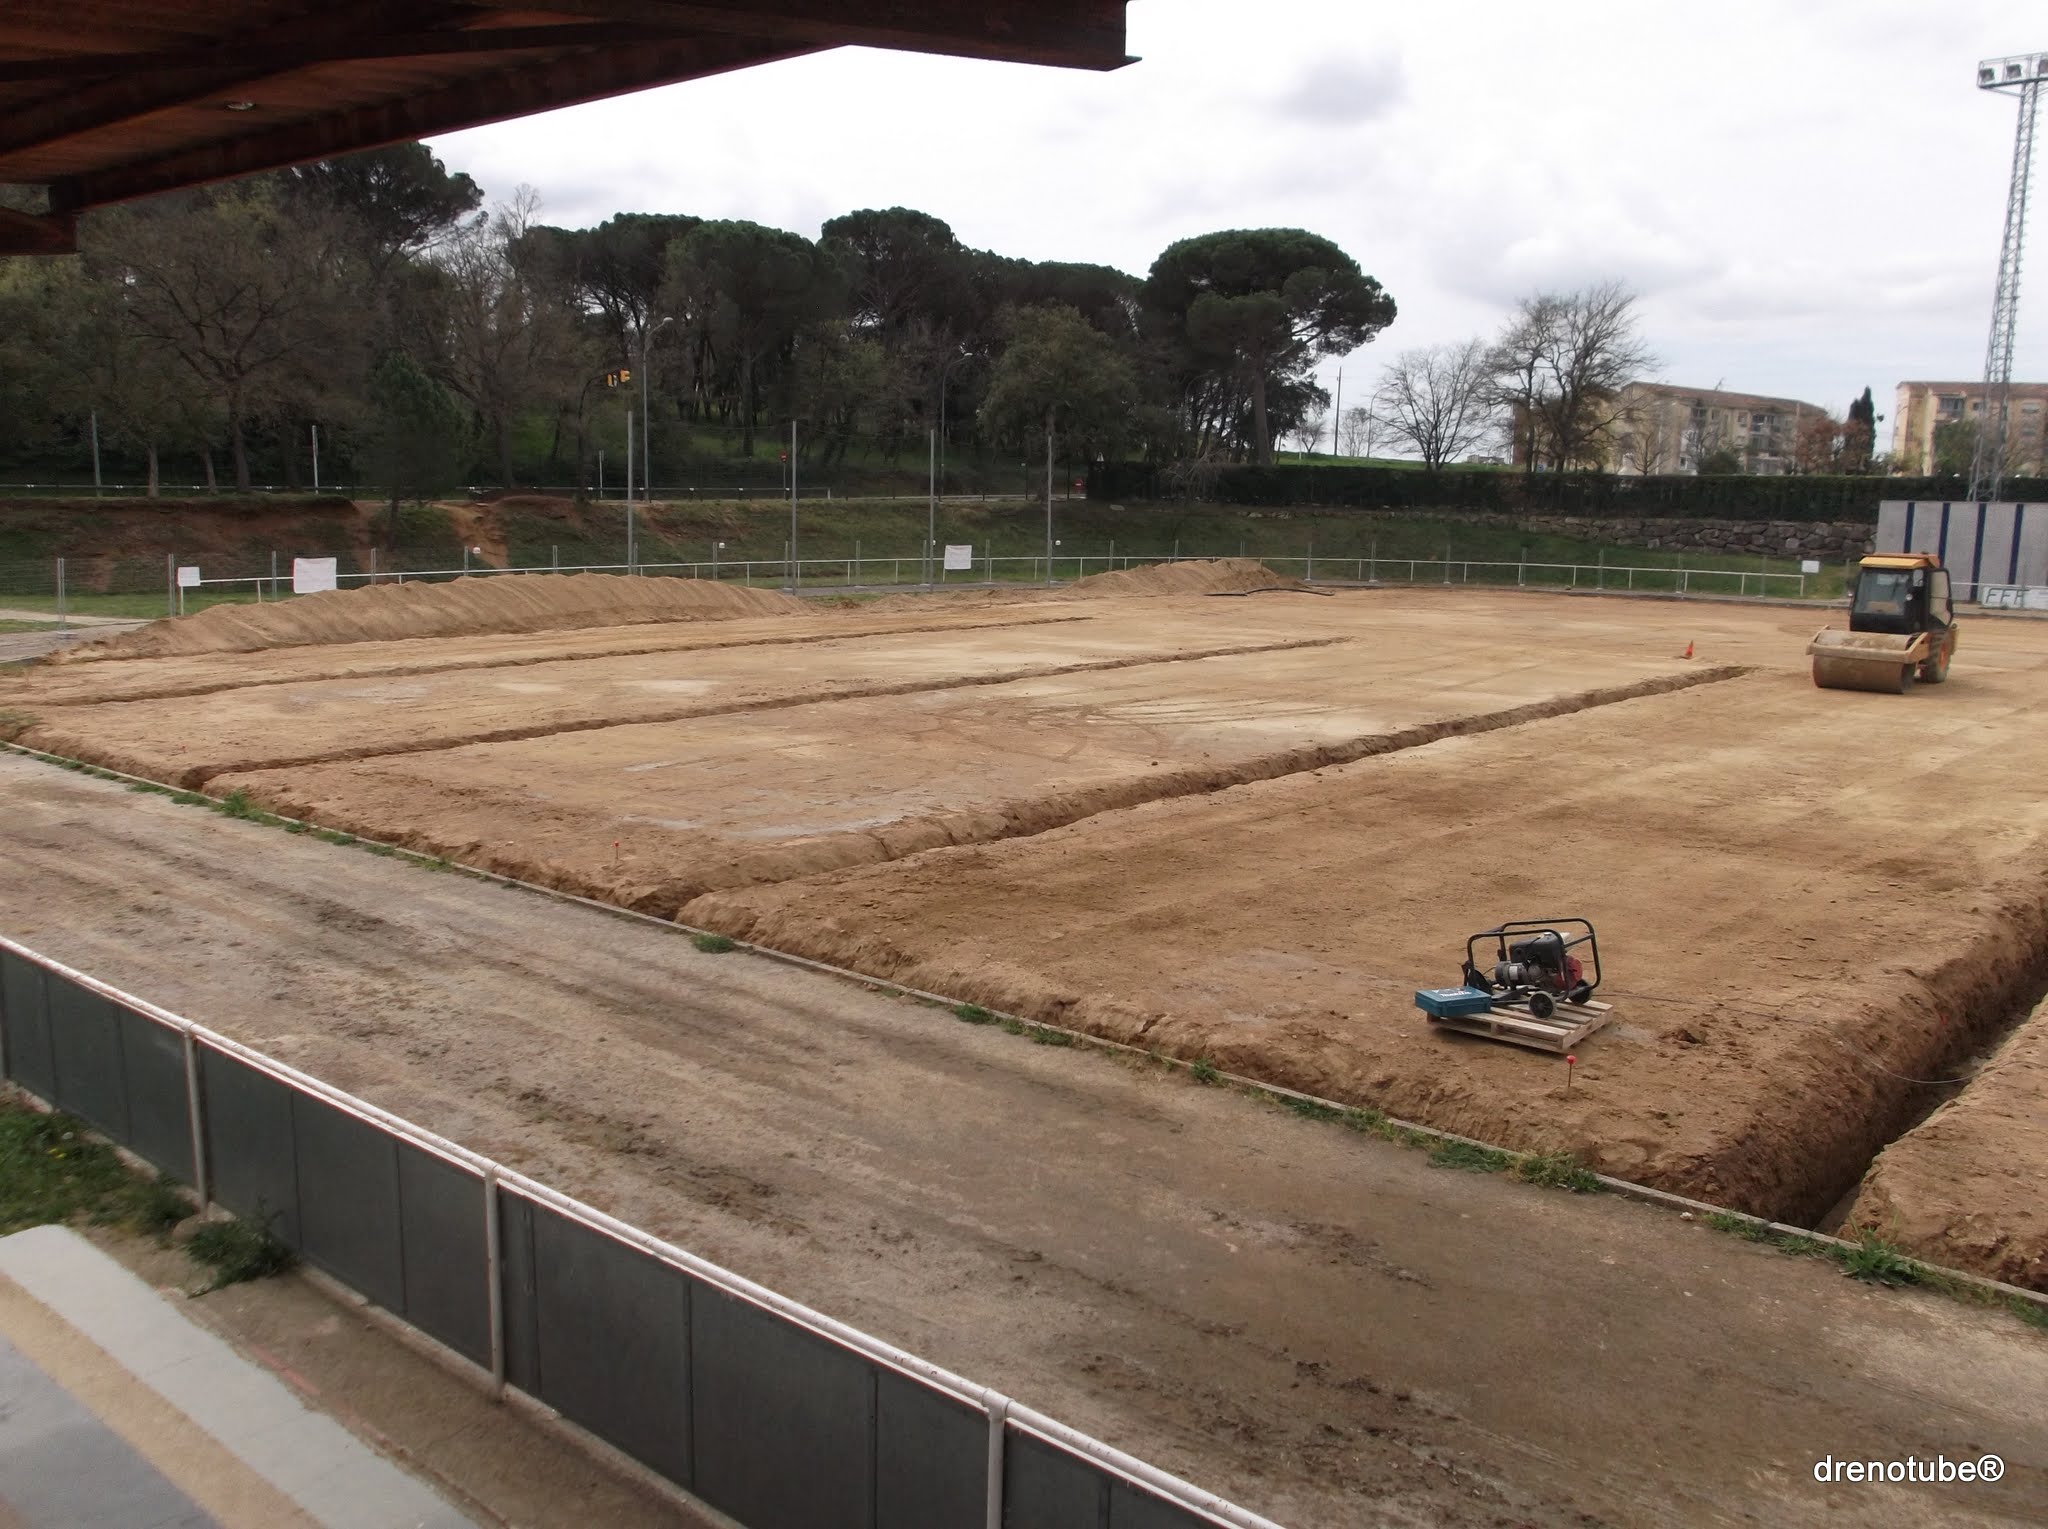 Drainage system drenotube®  in football field in Barcelona – Spain